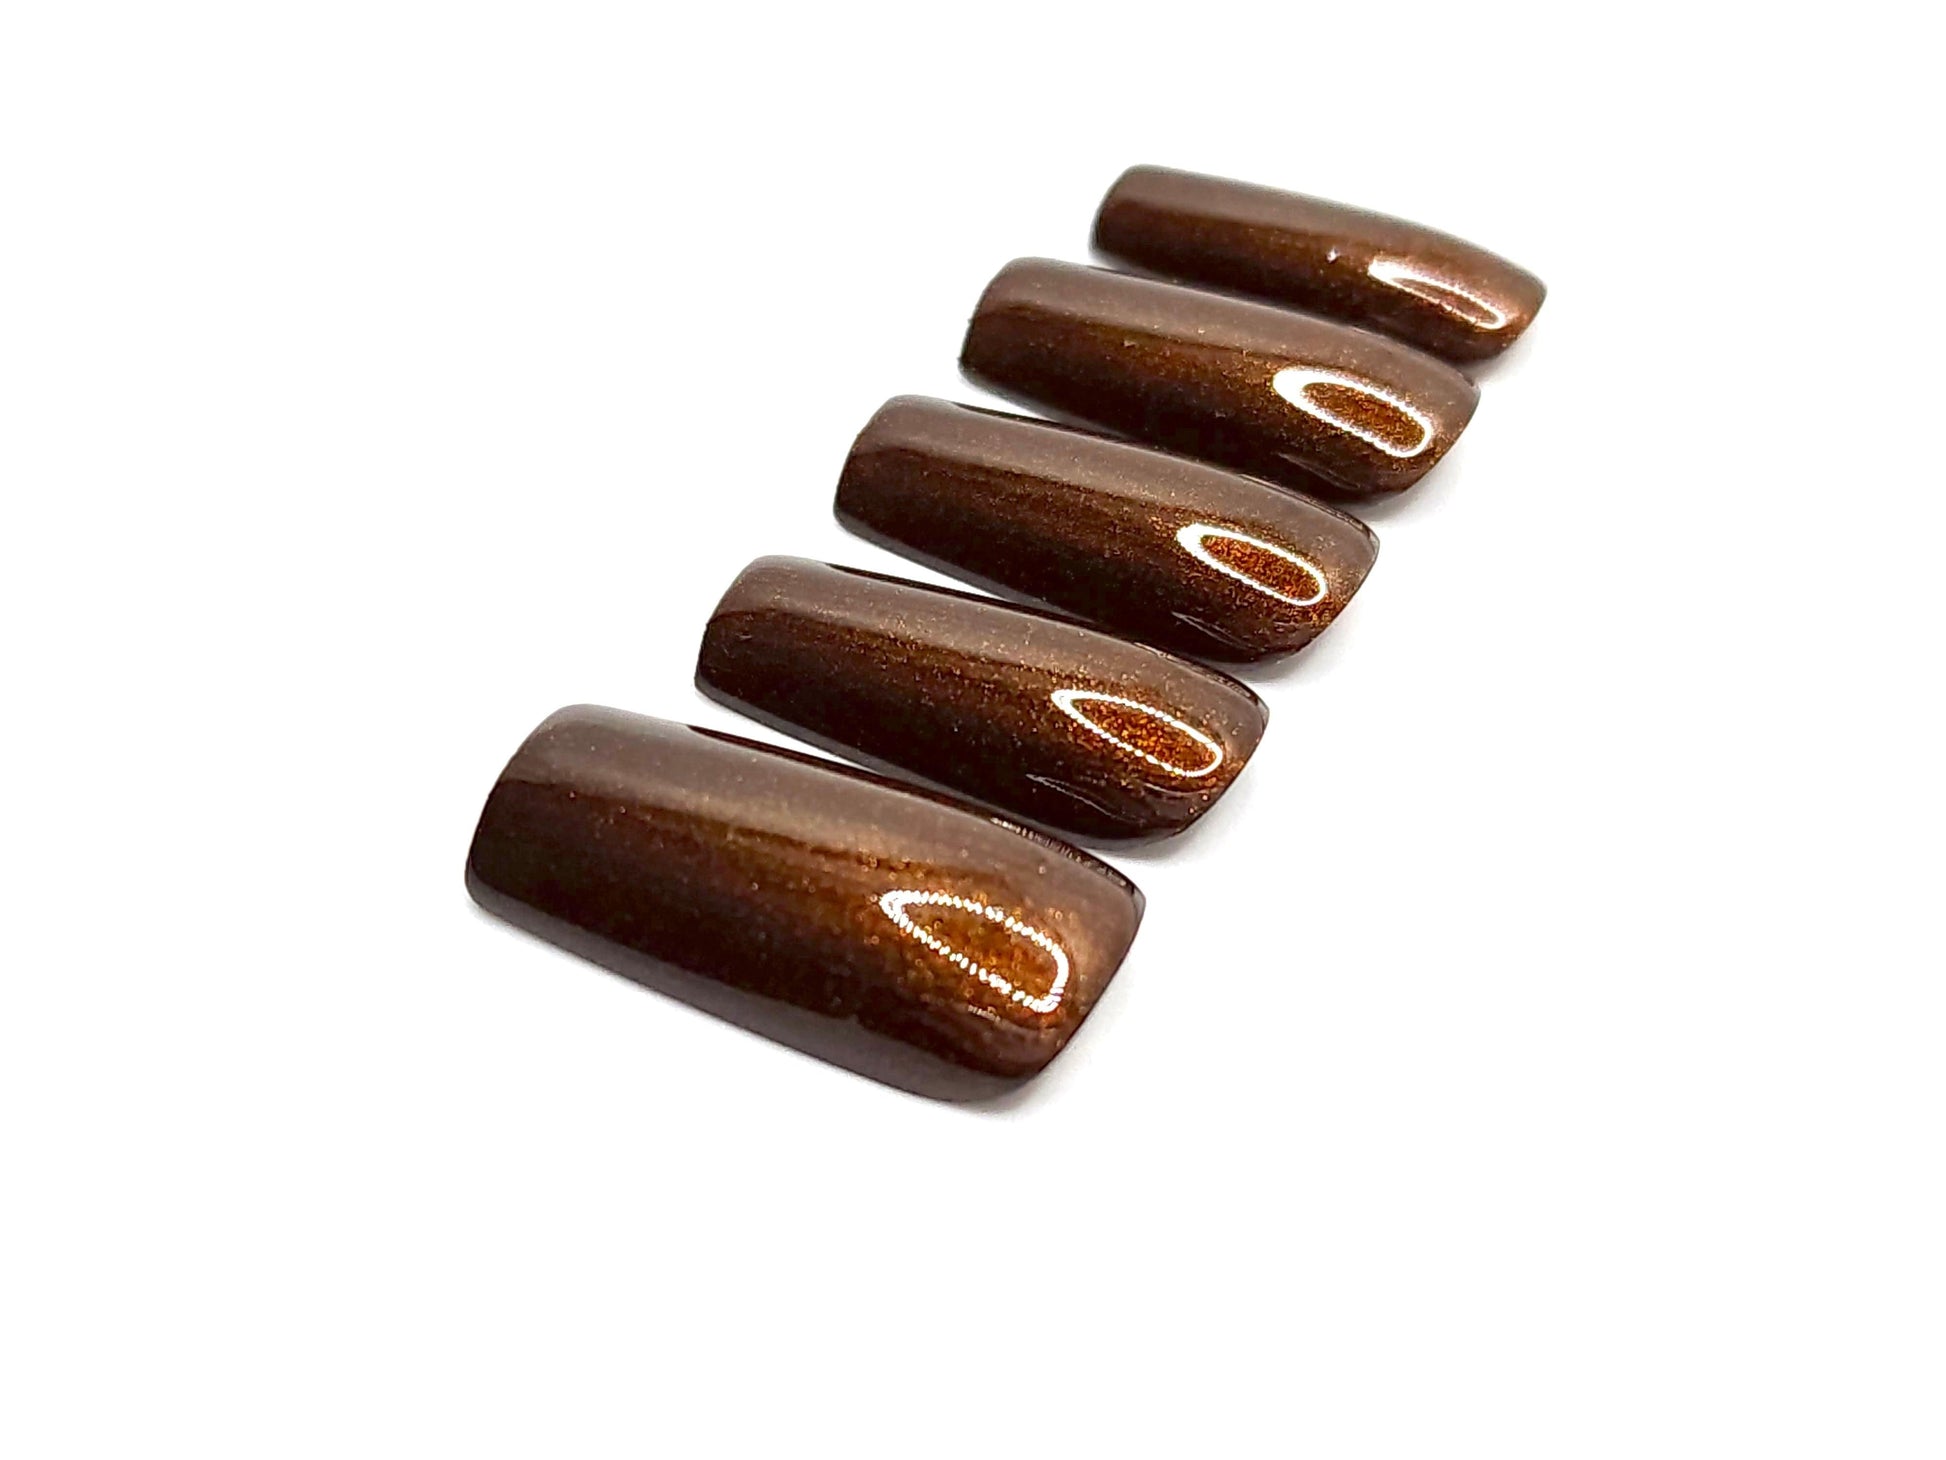 Metallic auburn brown Press on Nails, extra glossy metallic glue on nails.